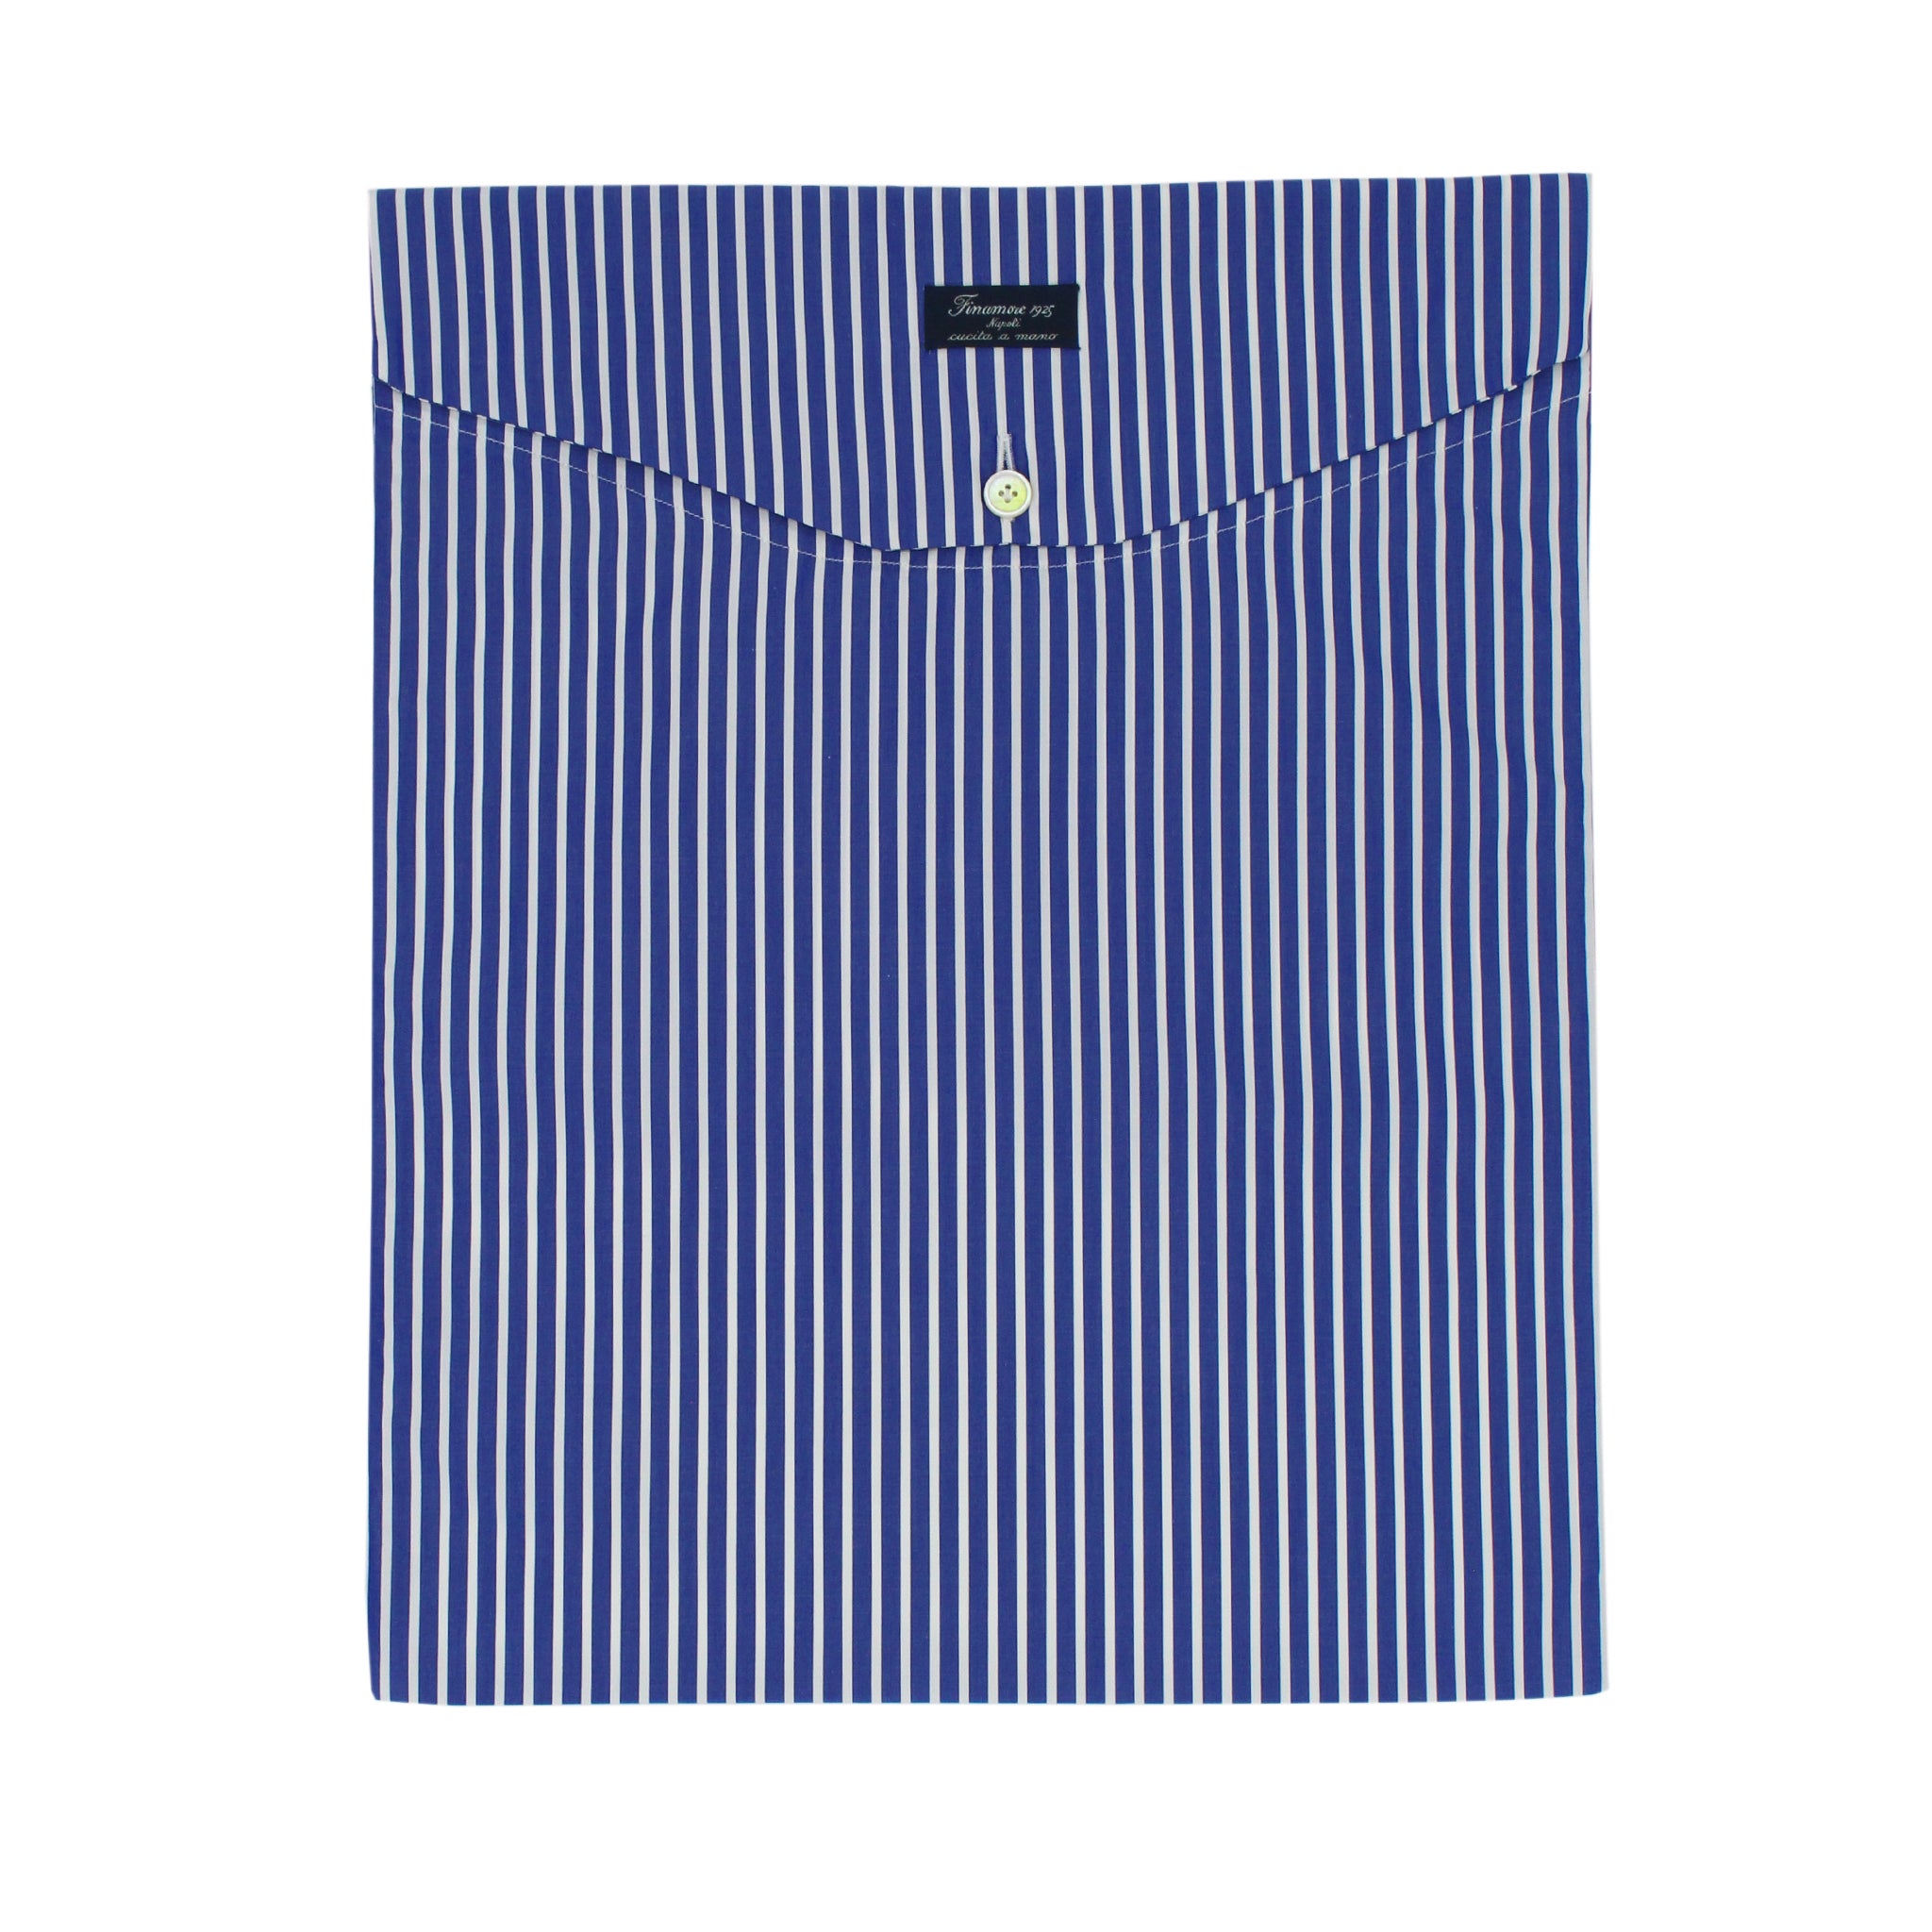 Blue striped cotton pajamas handmade with arriccio on the sleeve